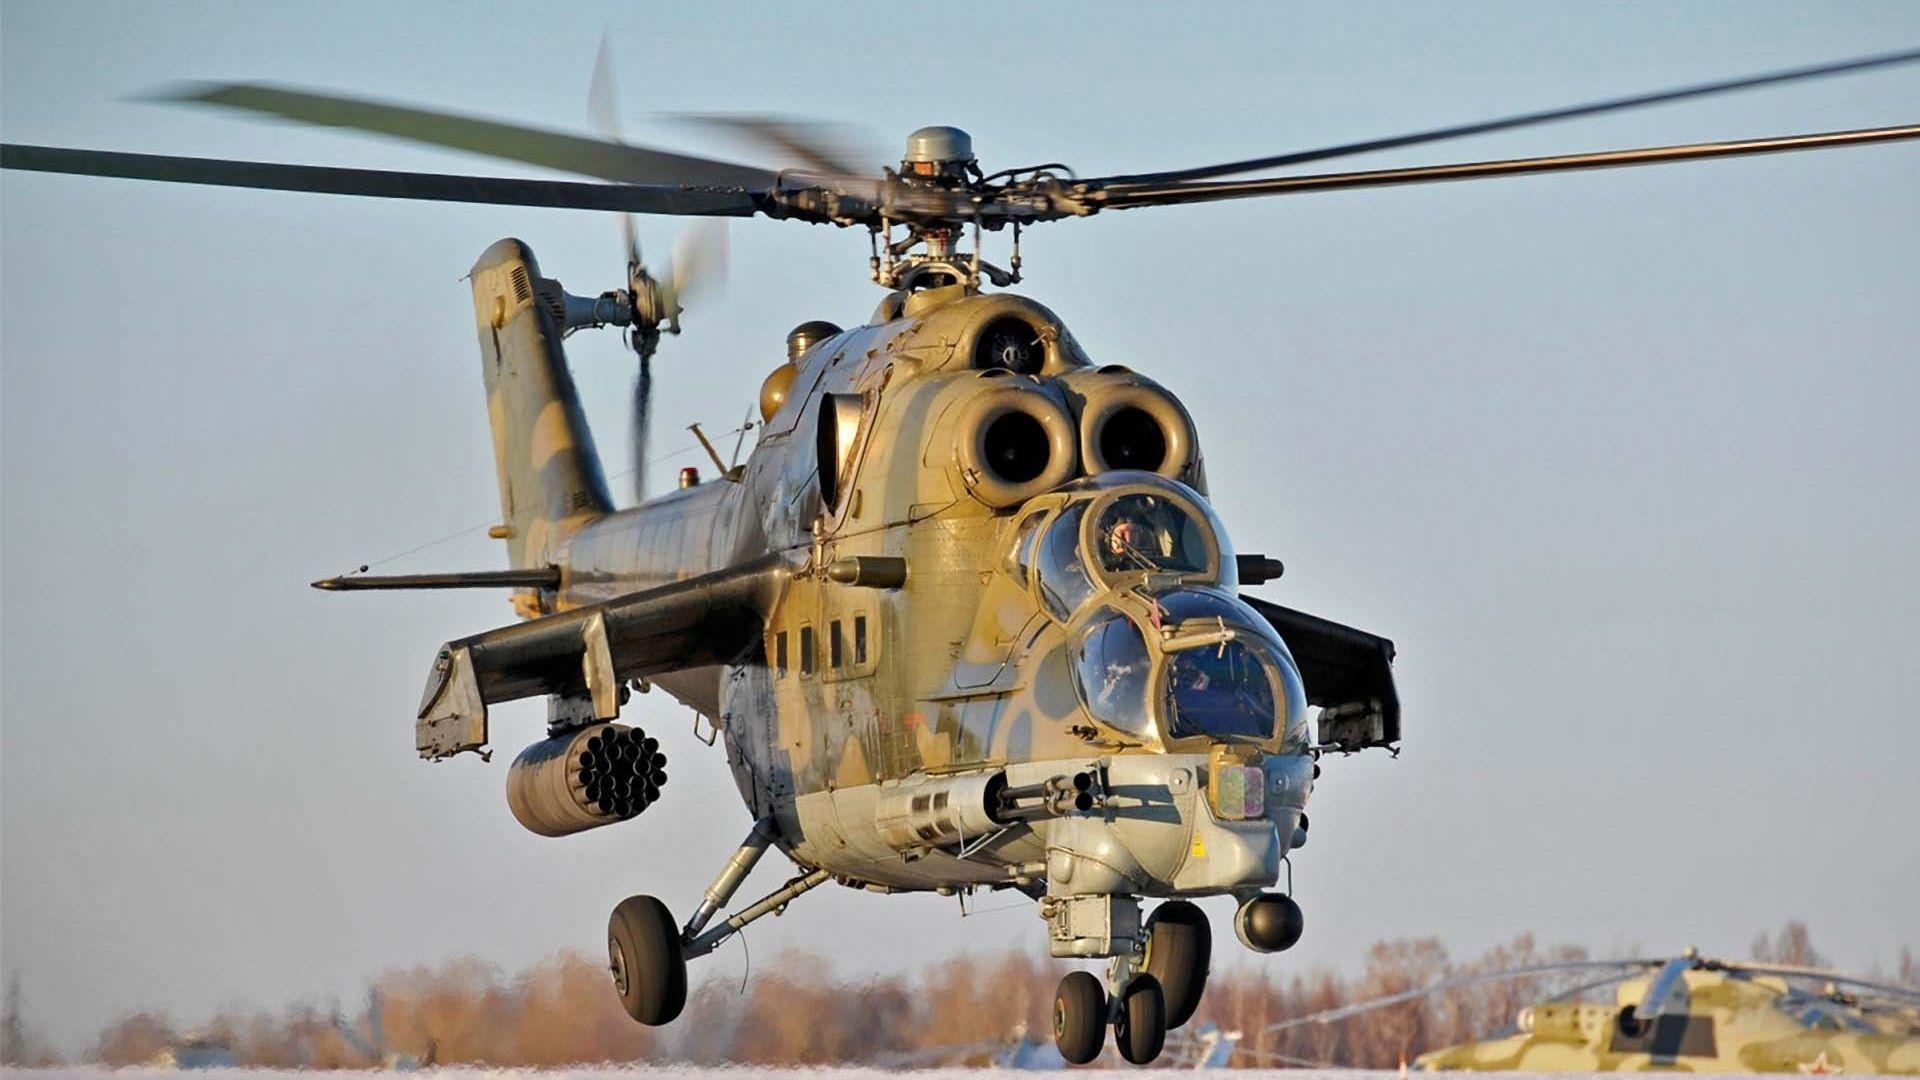 Download wallpaper 1920x1080 helicopter, mi- soviet, russia